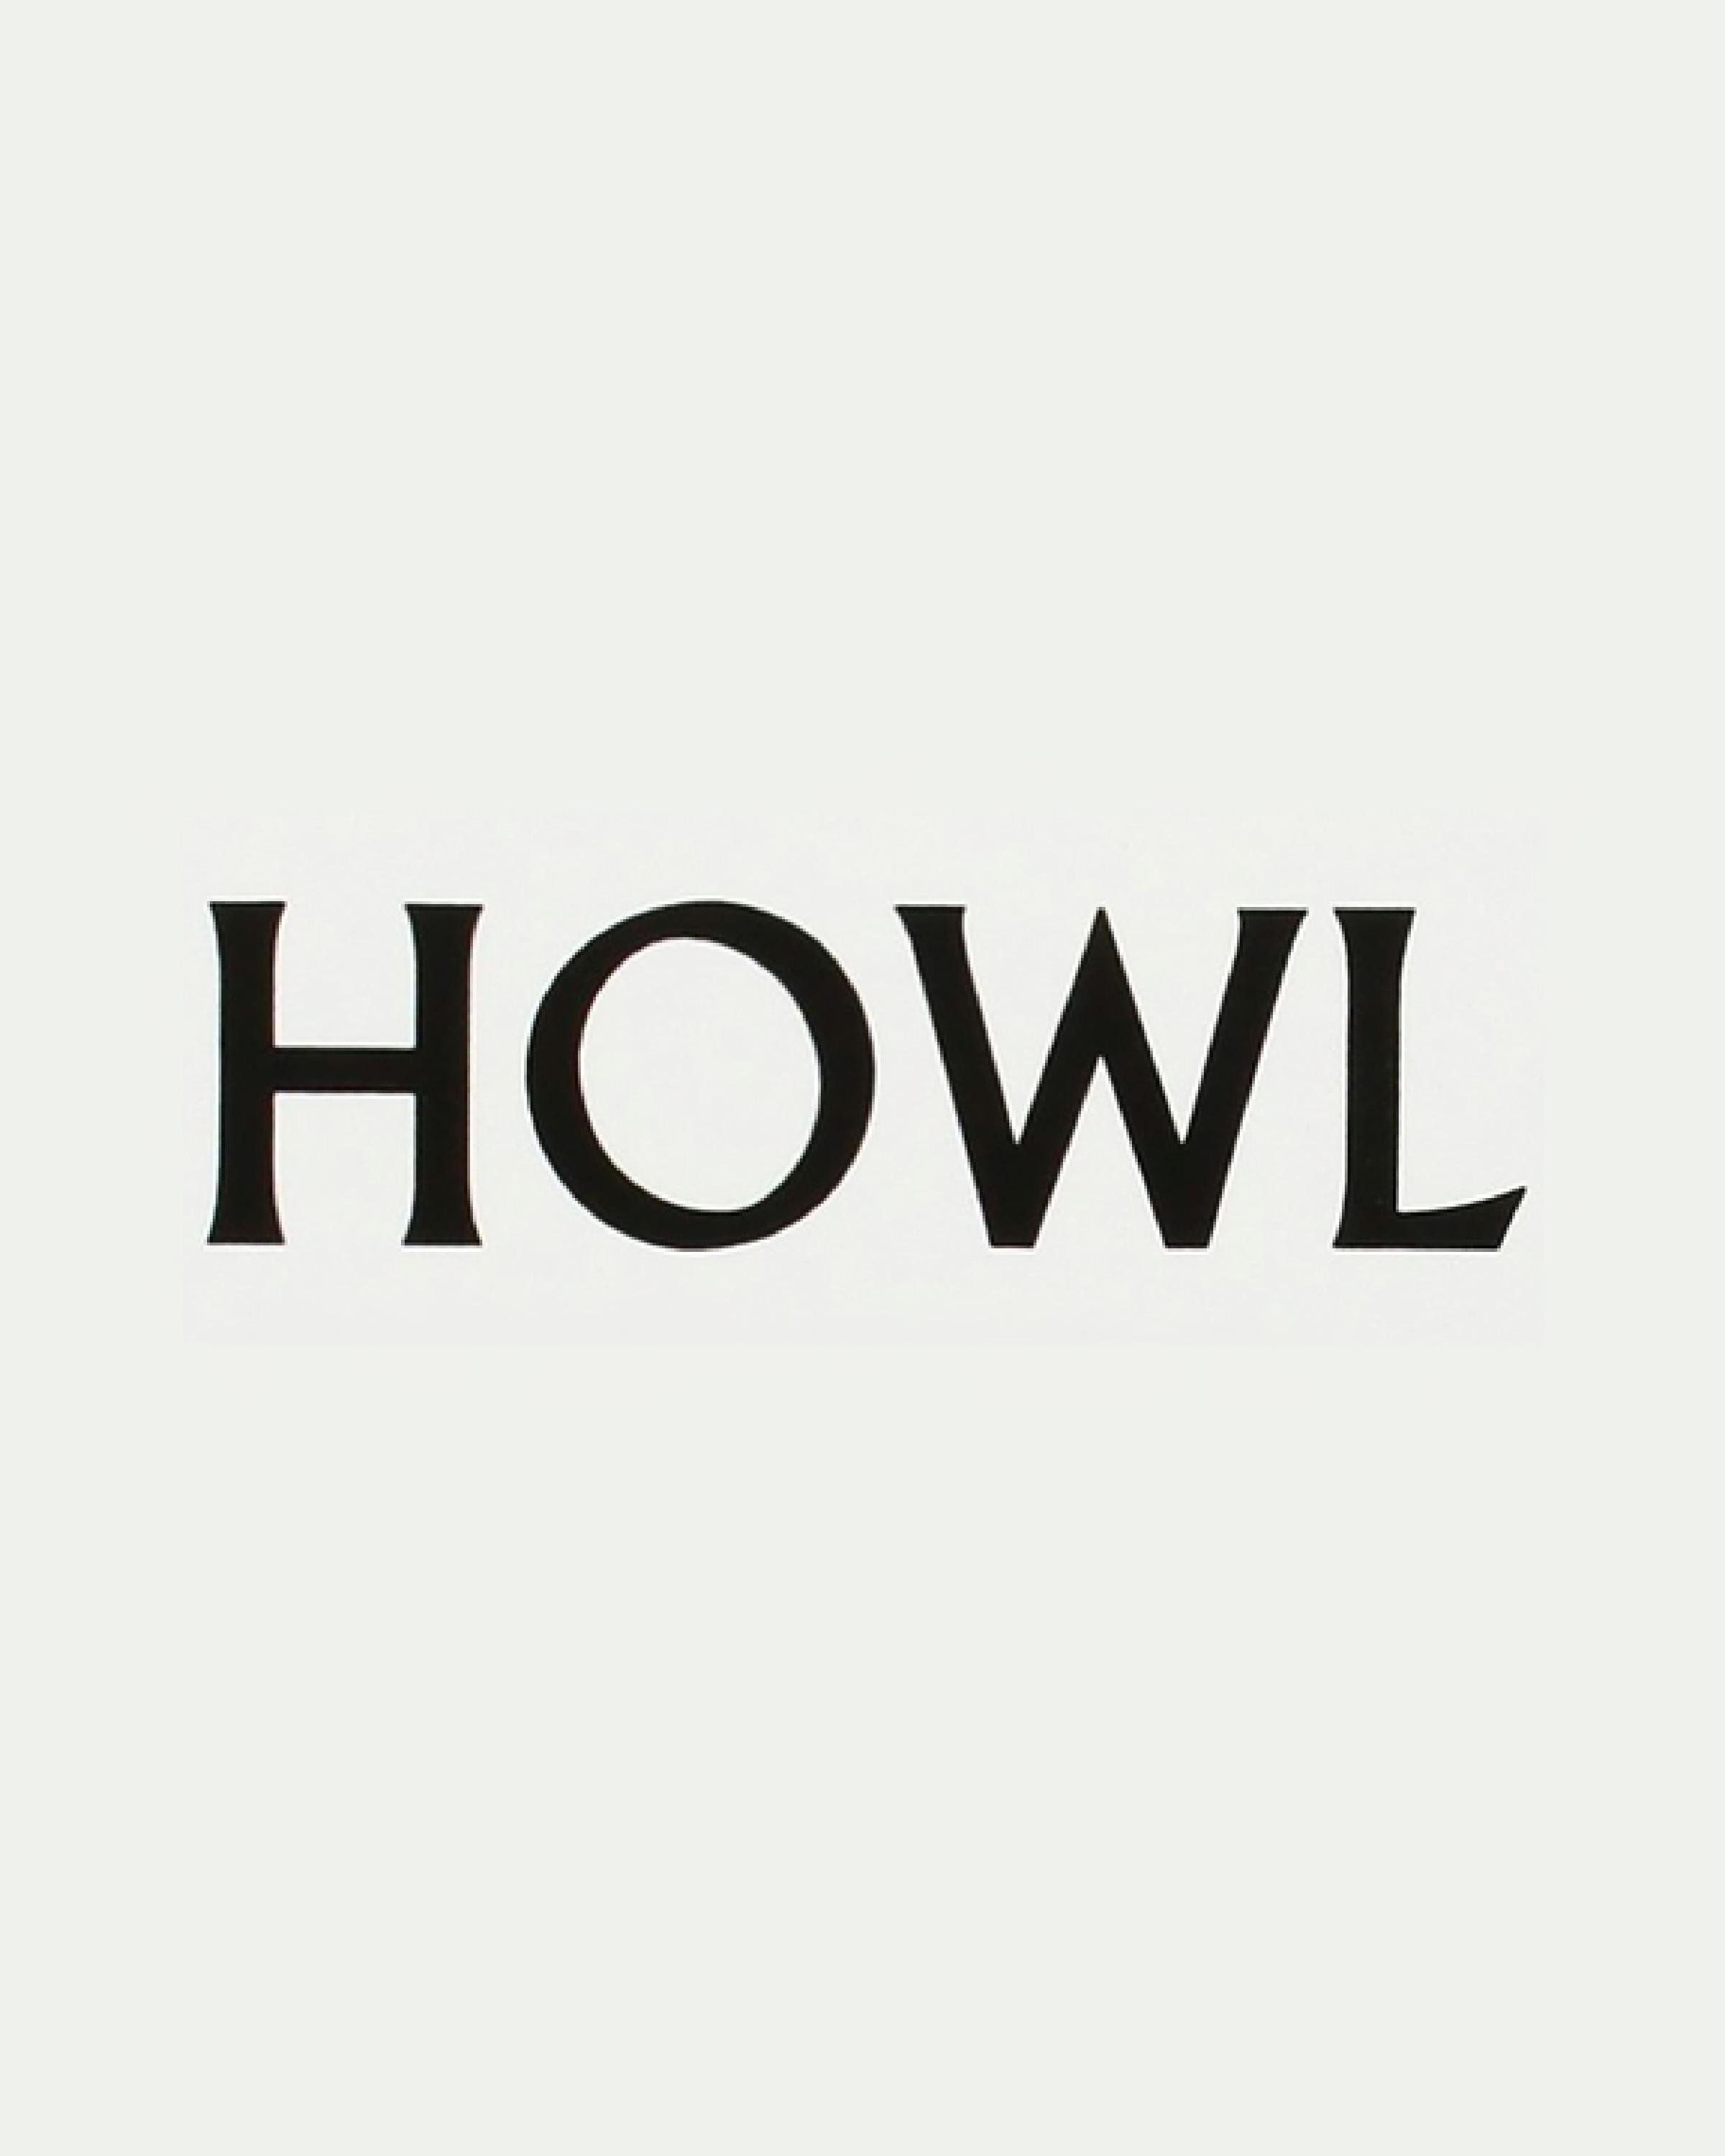 Howl-FINAL-web-page-001.jpg